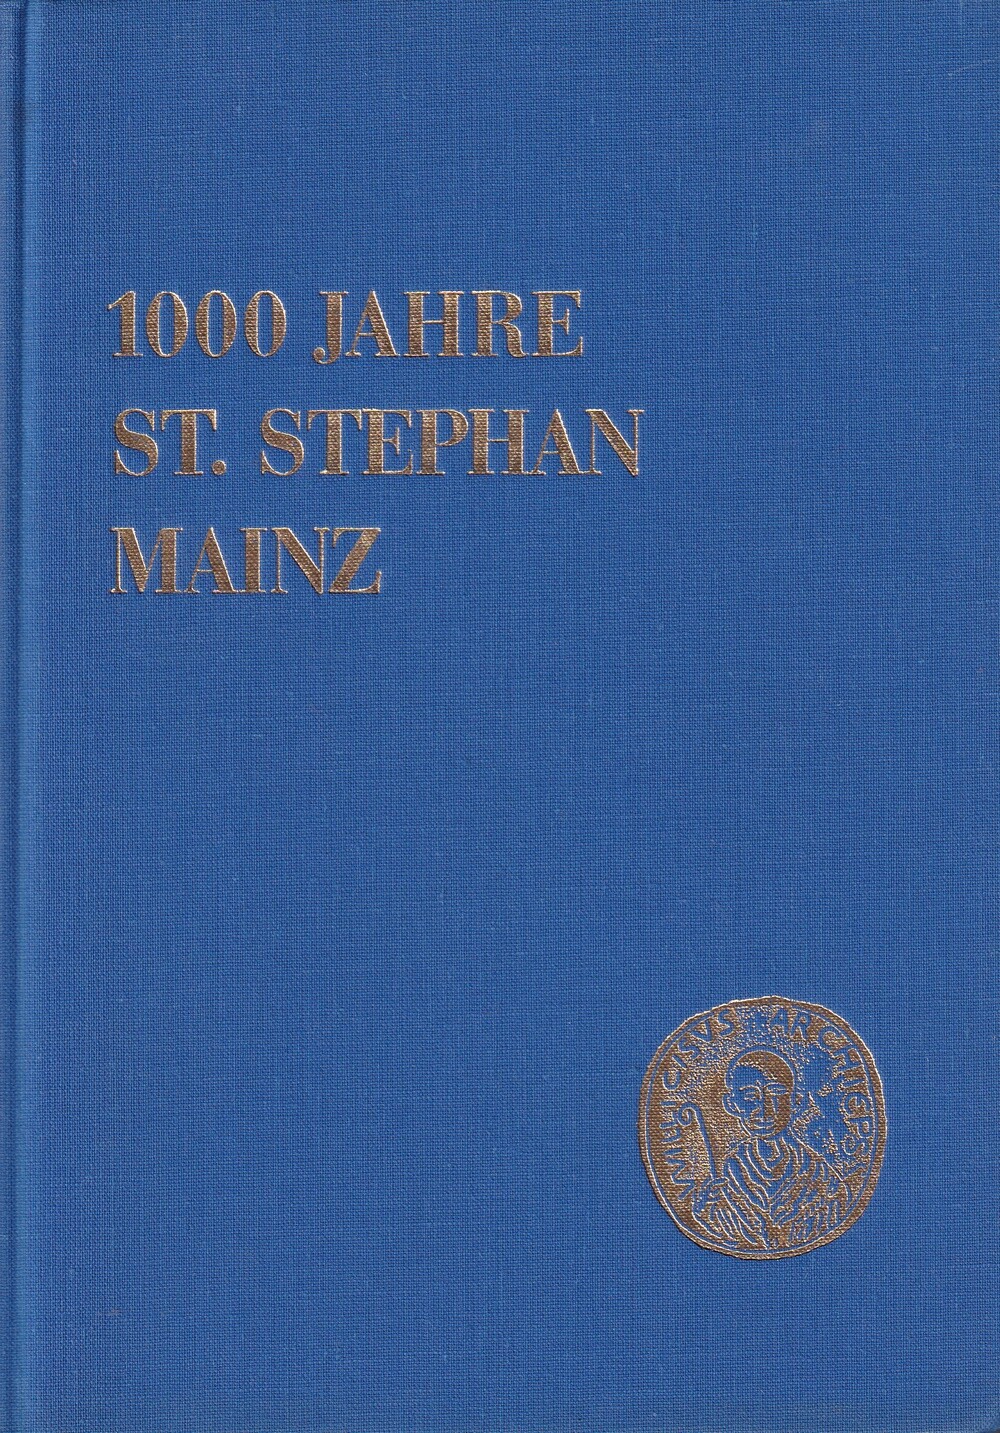 1000 Jahre St. Stephan Mainz (Kulturverein Guntersblum CC BY-NC-SA)